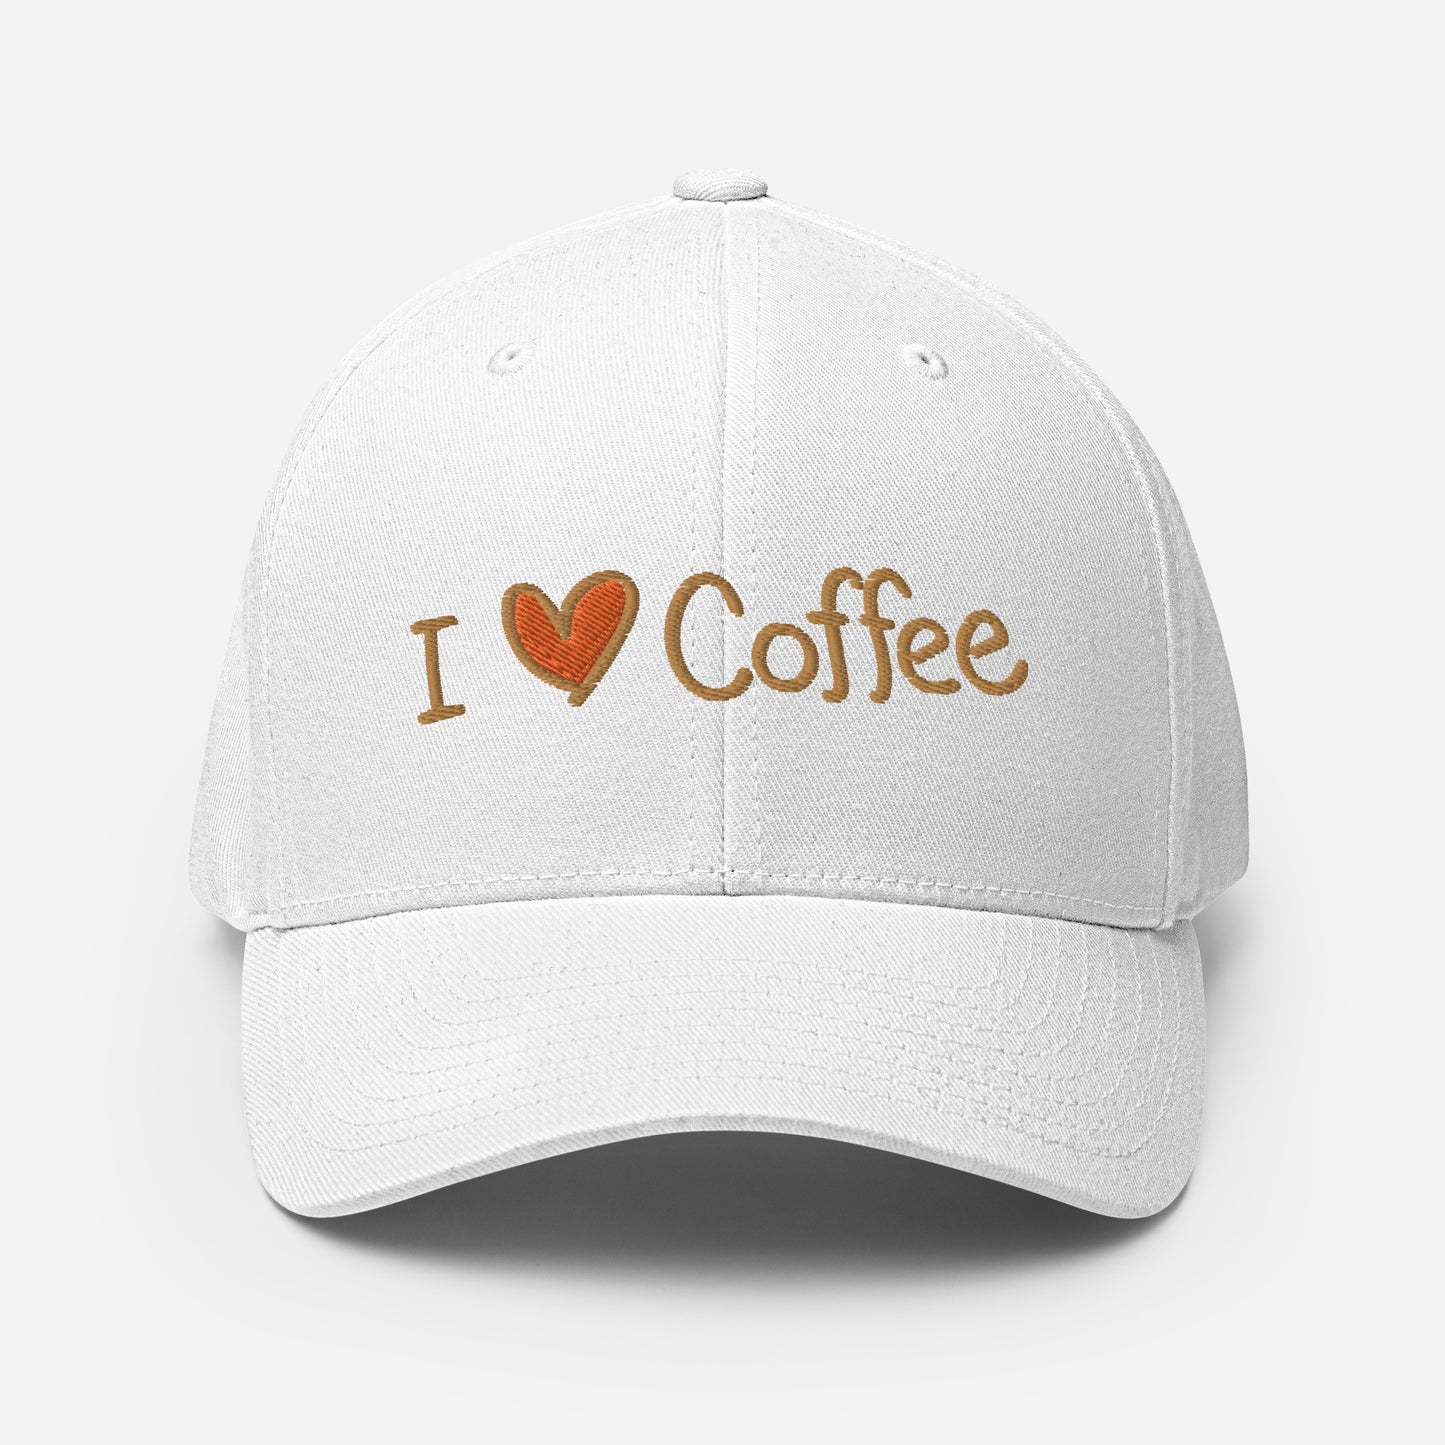 I LOVE Coffee - Structured Twill Cap